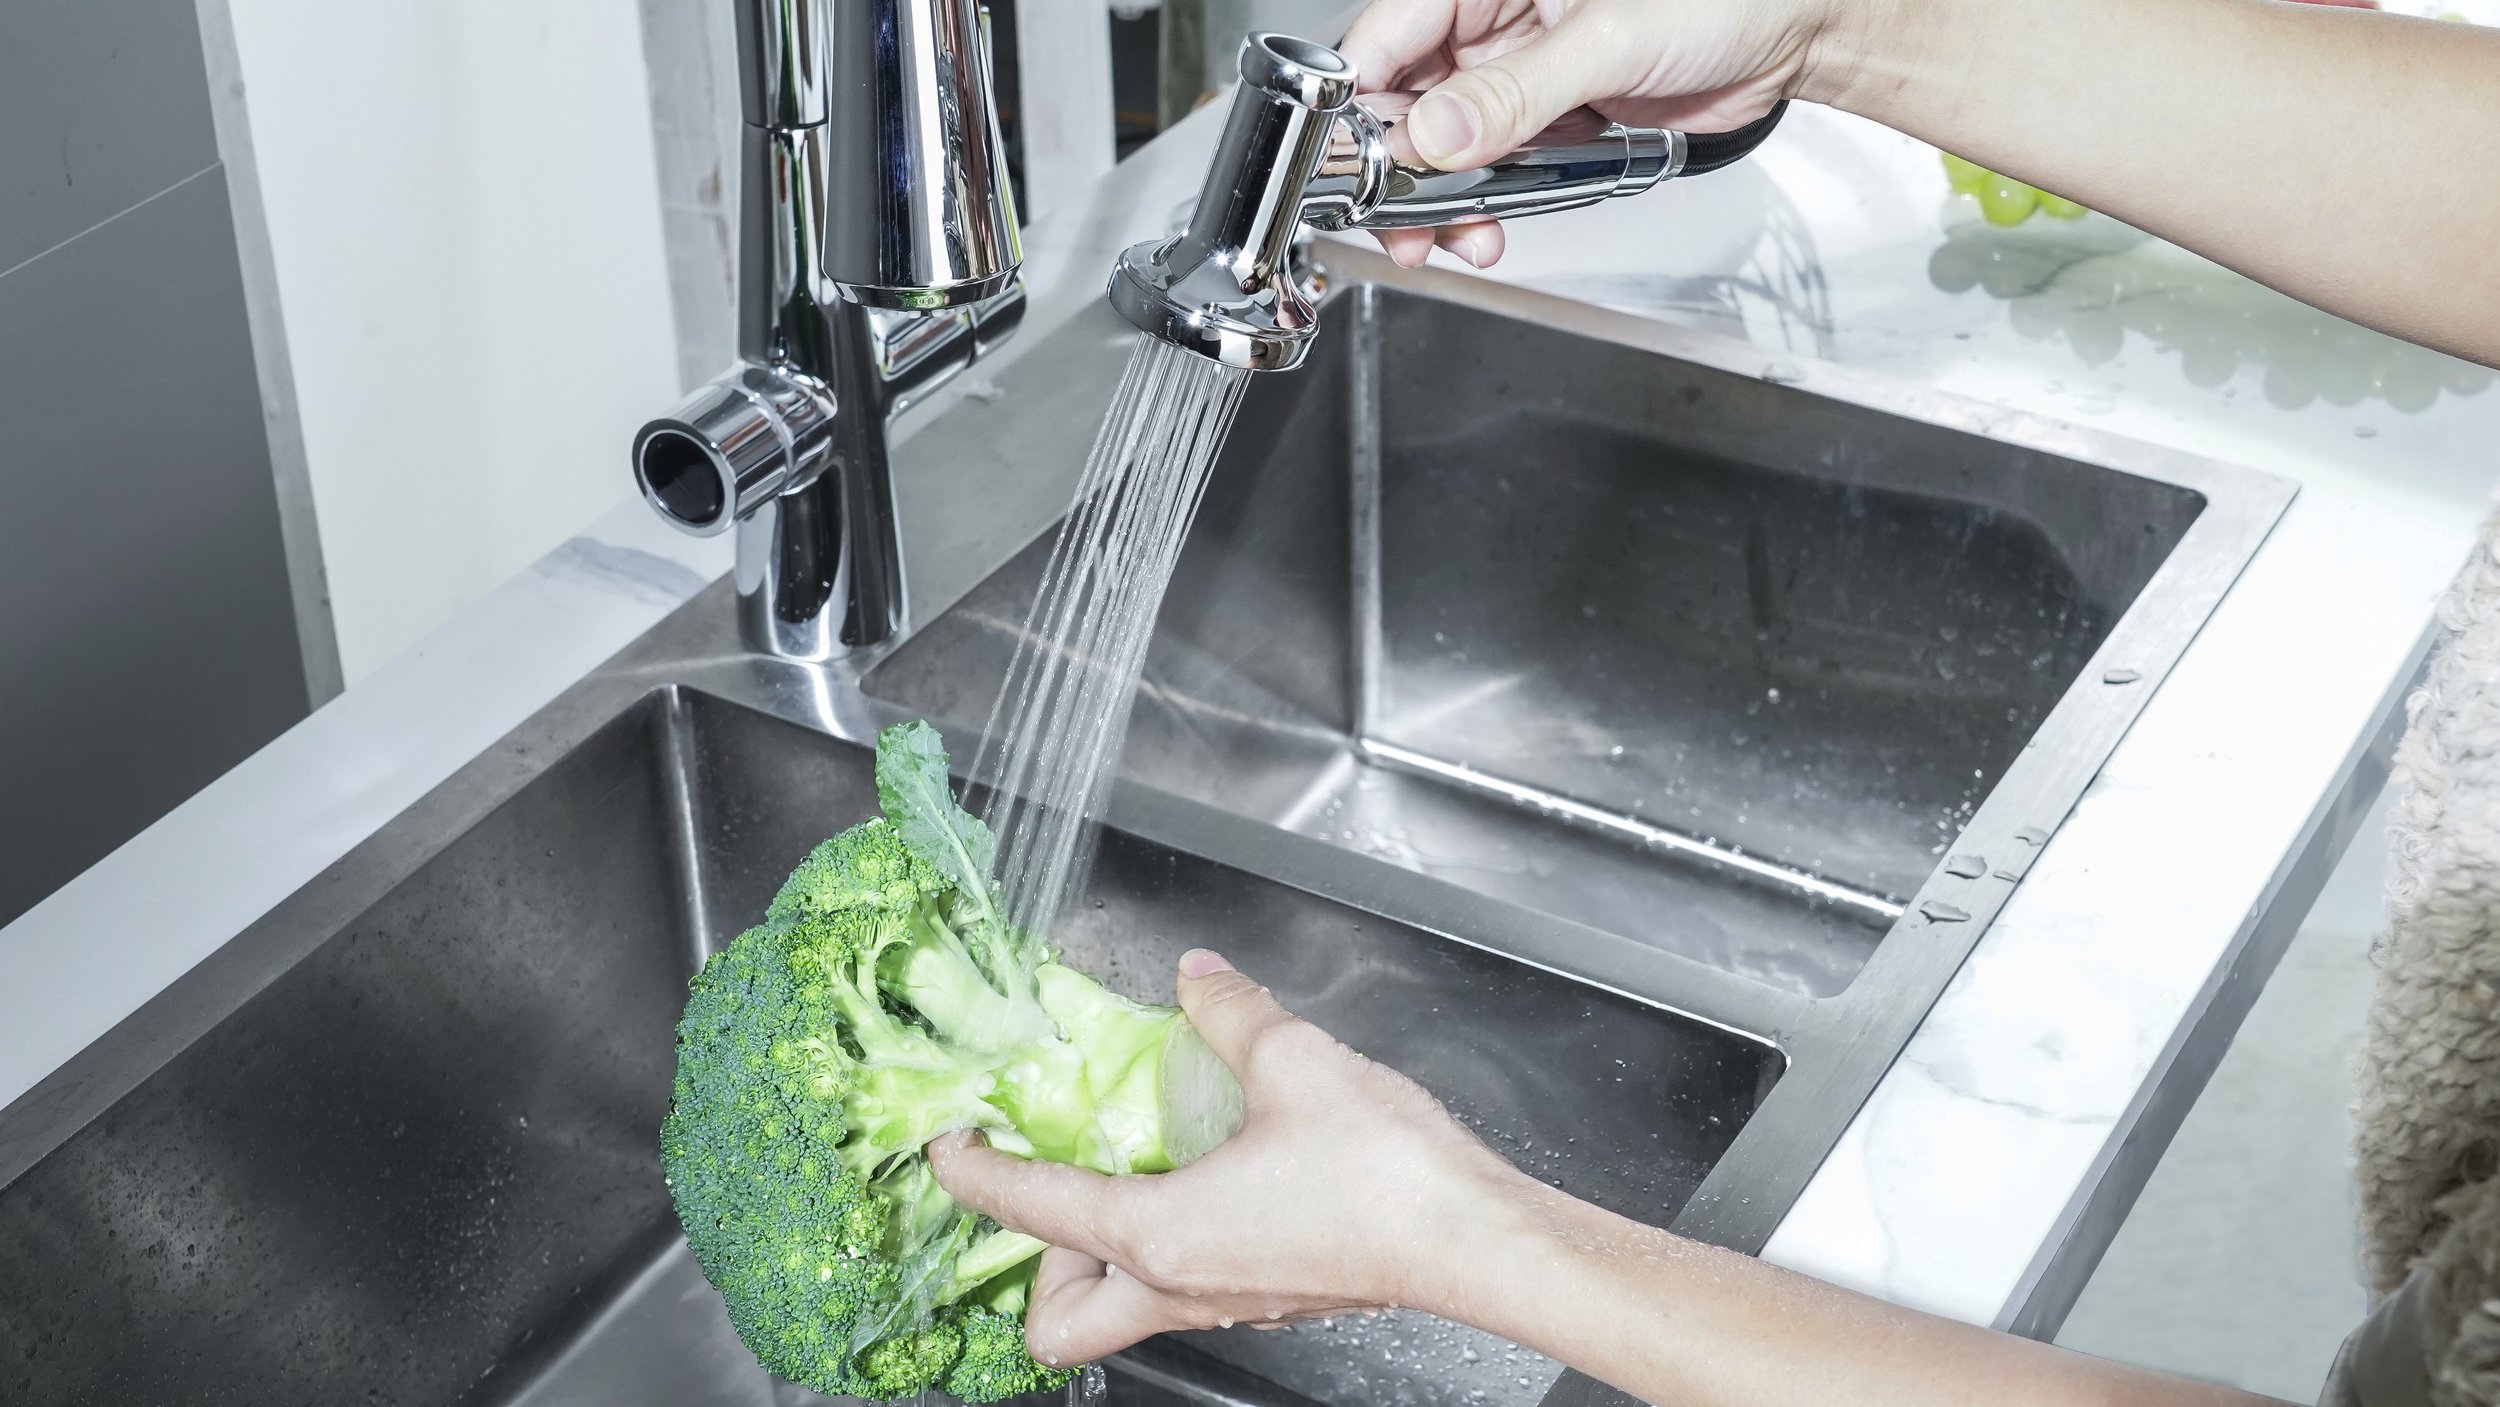 Rinsing broccoli.jpg